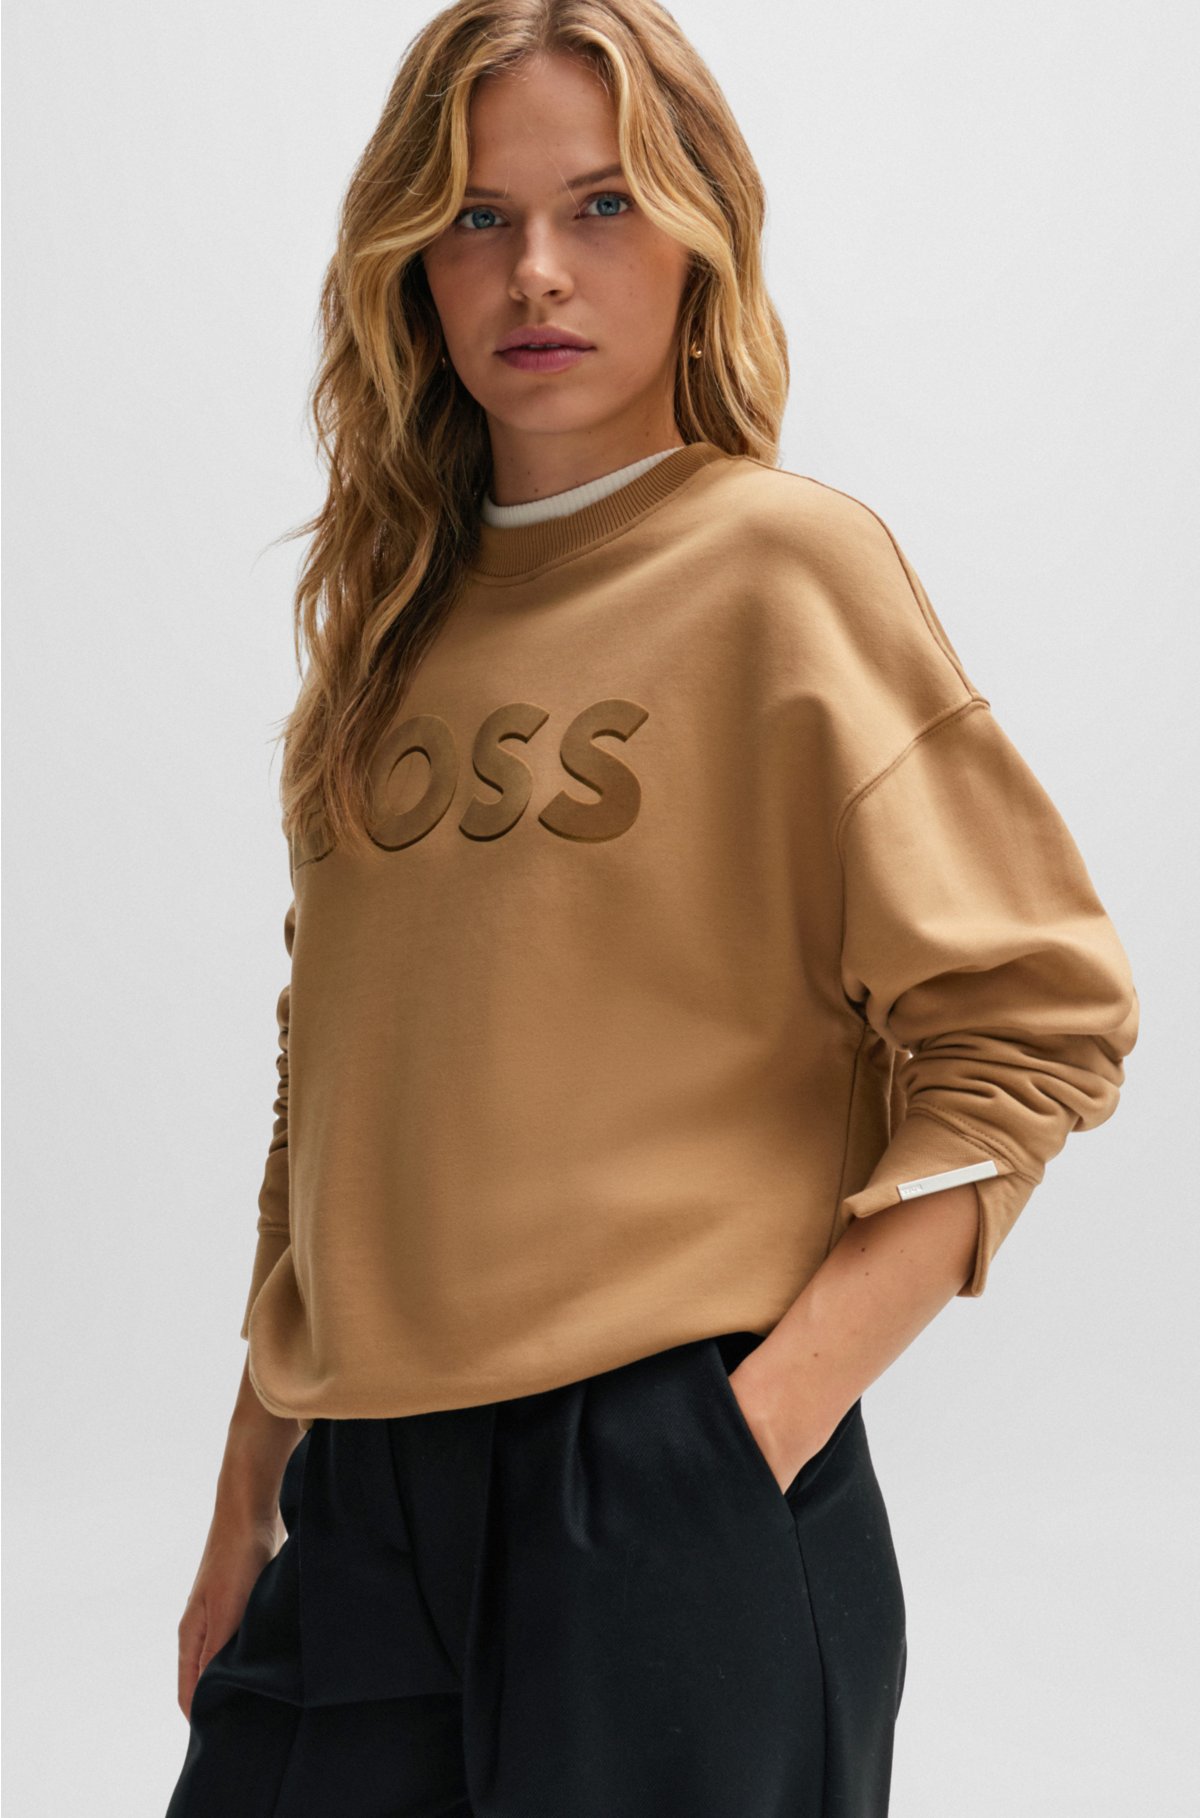 Cotton-terry sweatshirt with logo detail, Light Brown